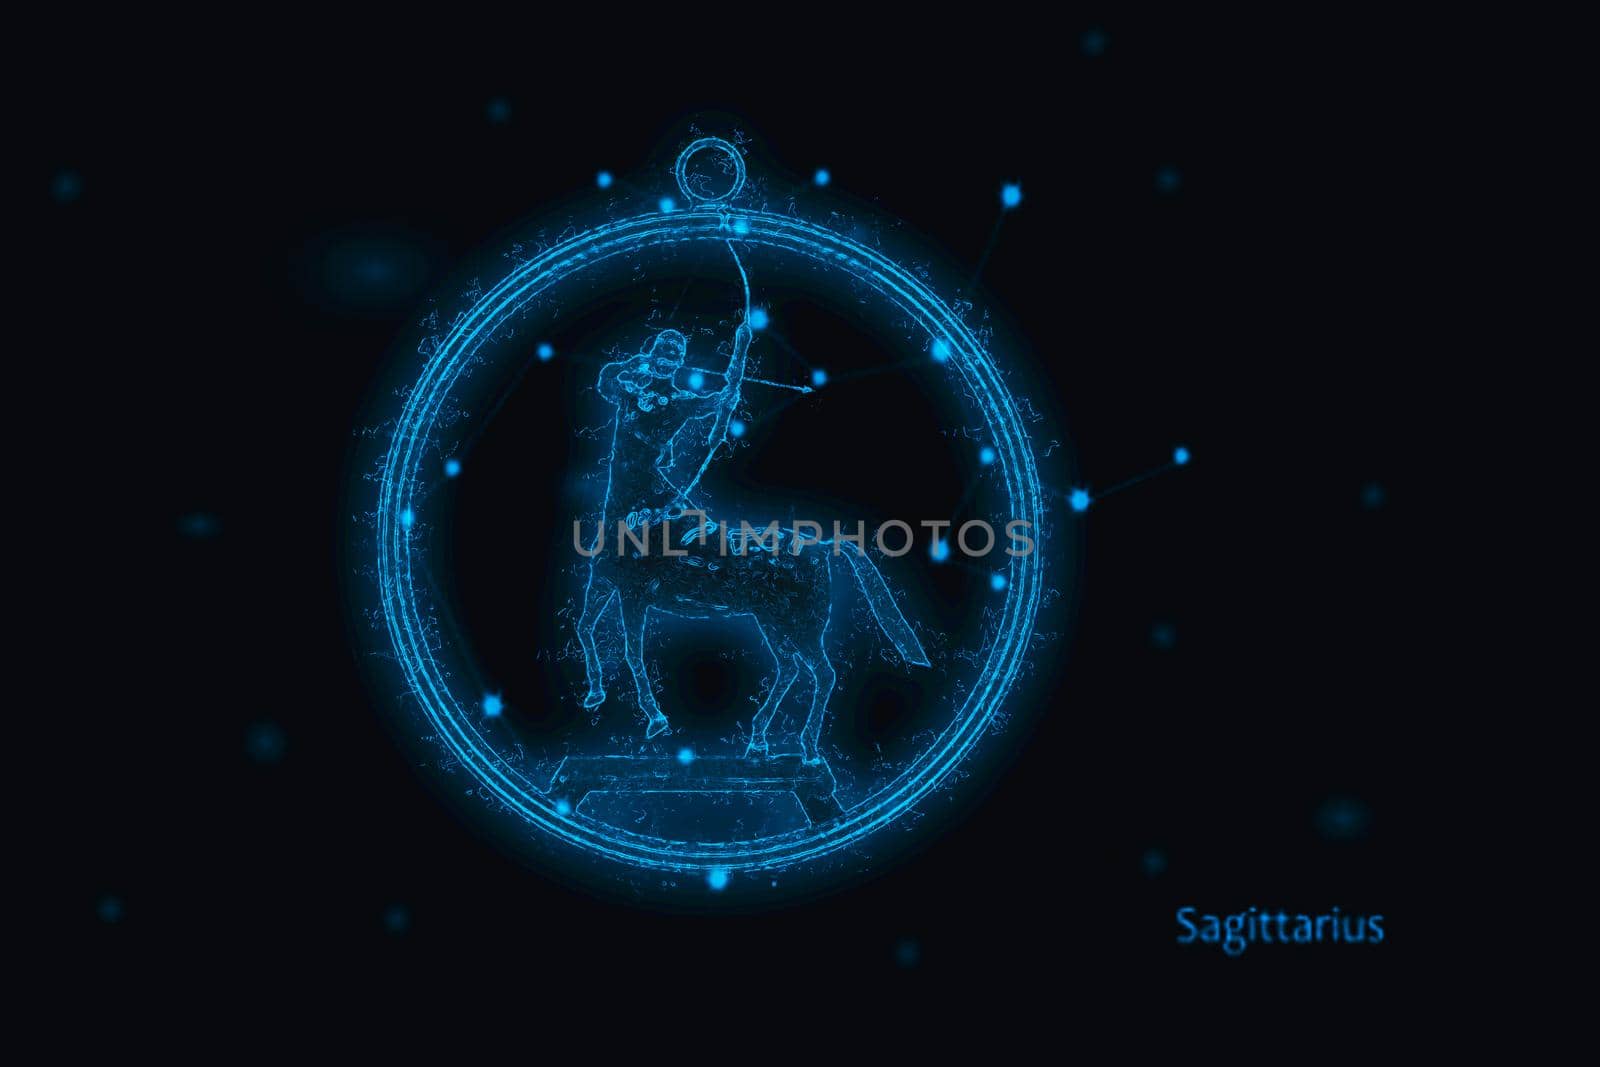 3d rendering  sagittarius Zodiac Sign. Abstract night sky background